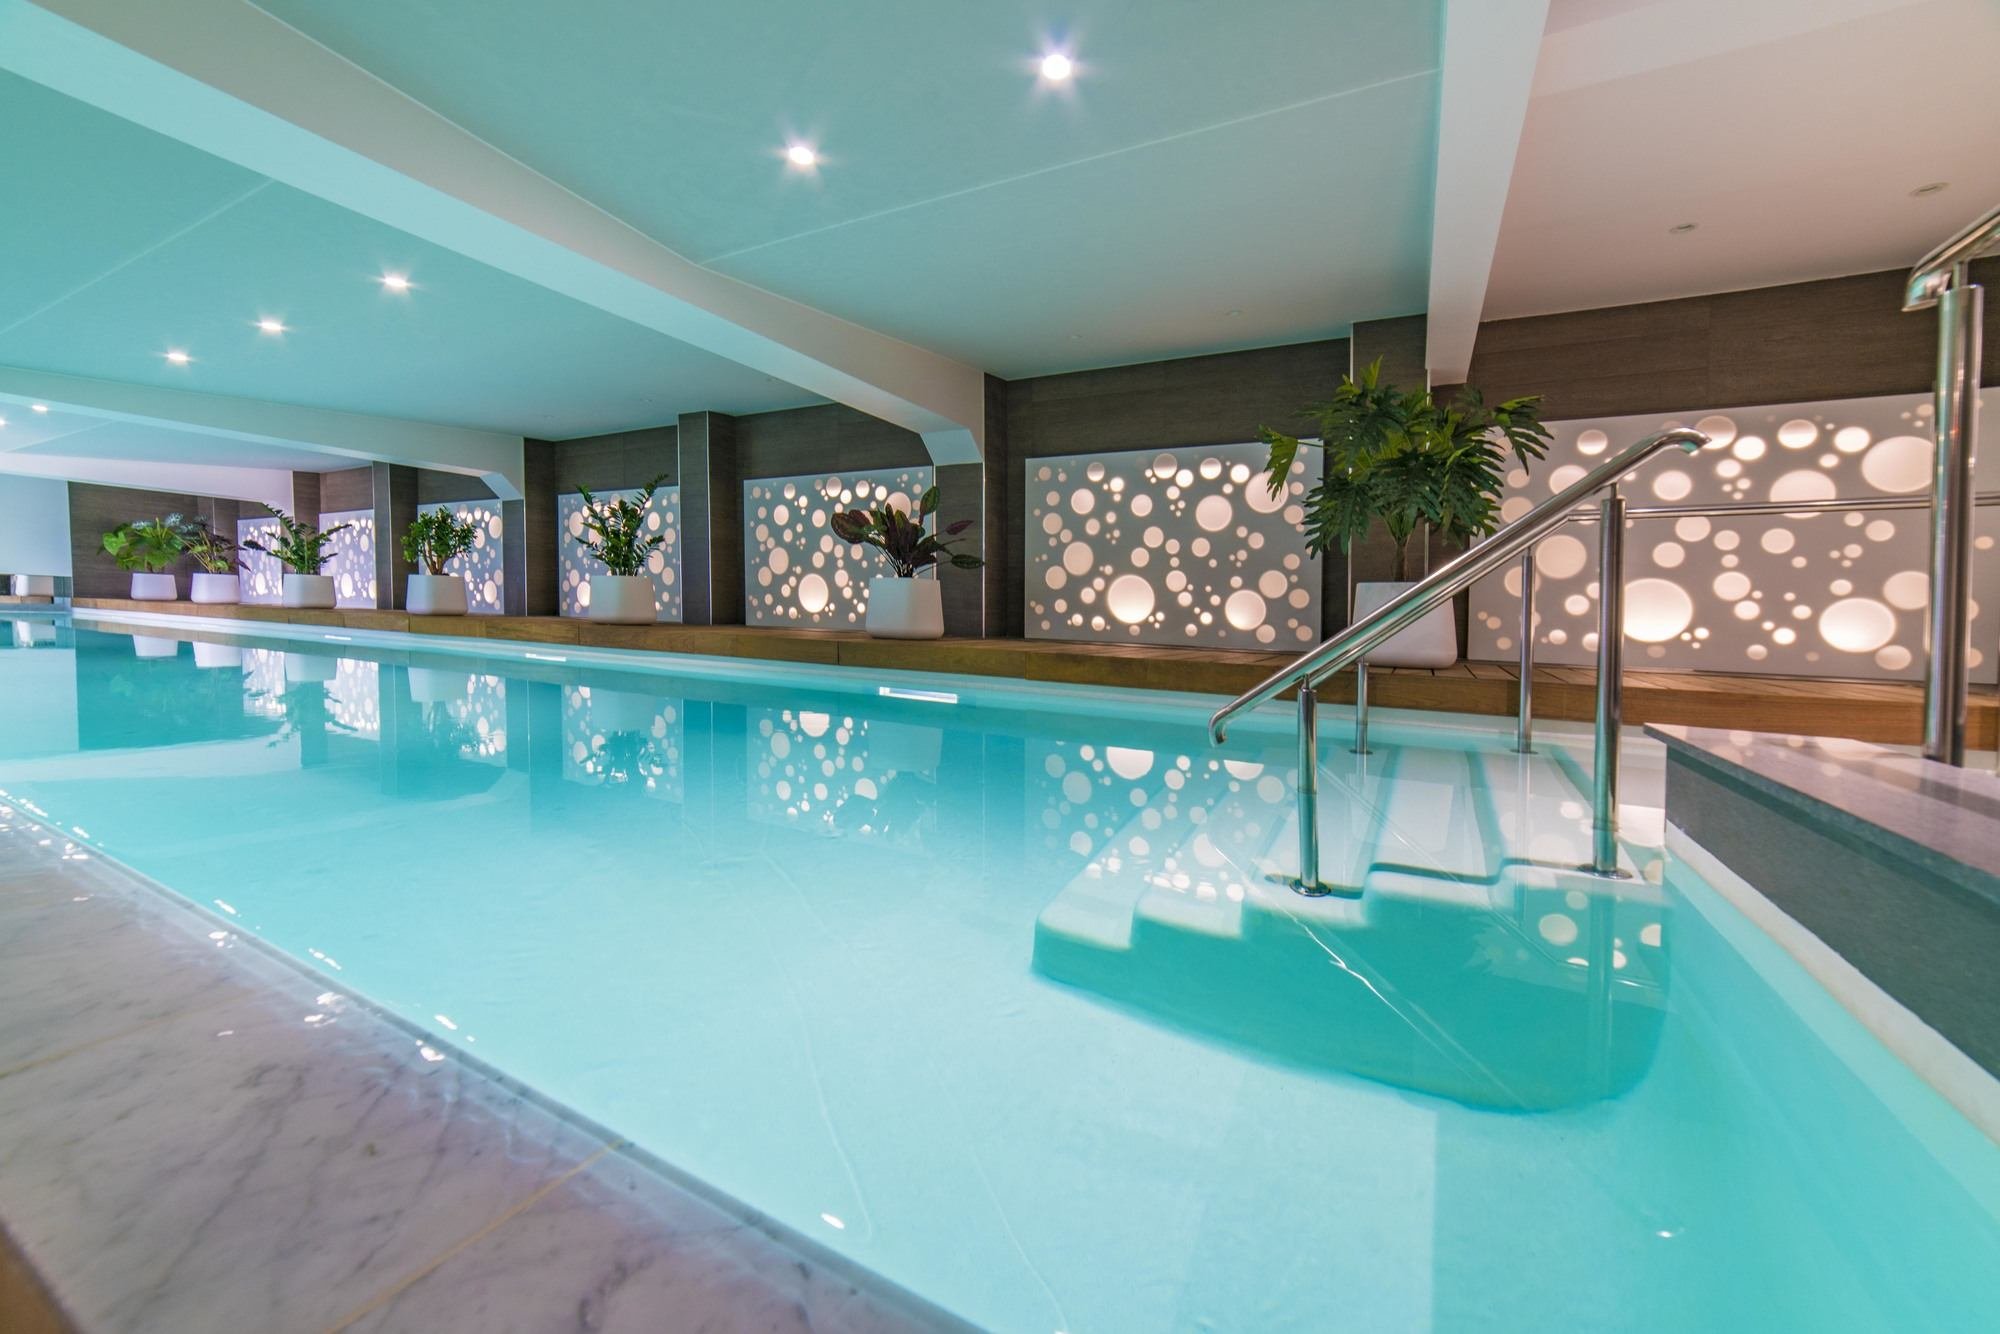 Les Jardins de Saint-Cloud | Hotel swimming pool Paris